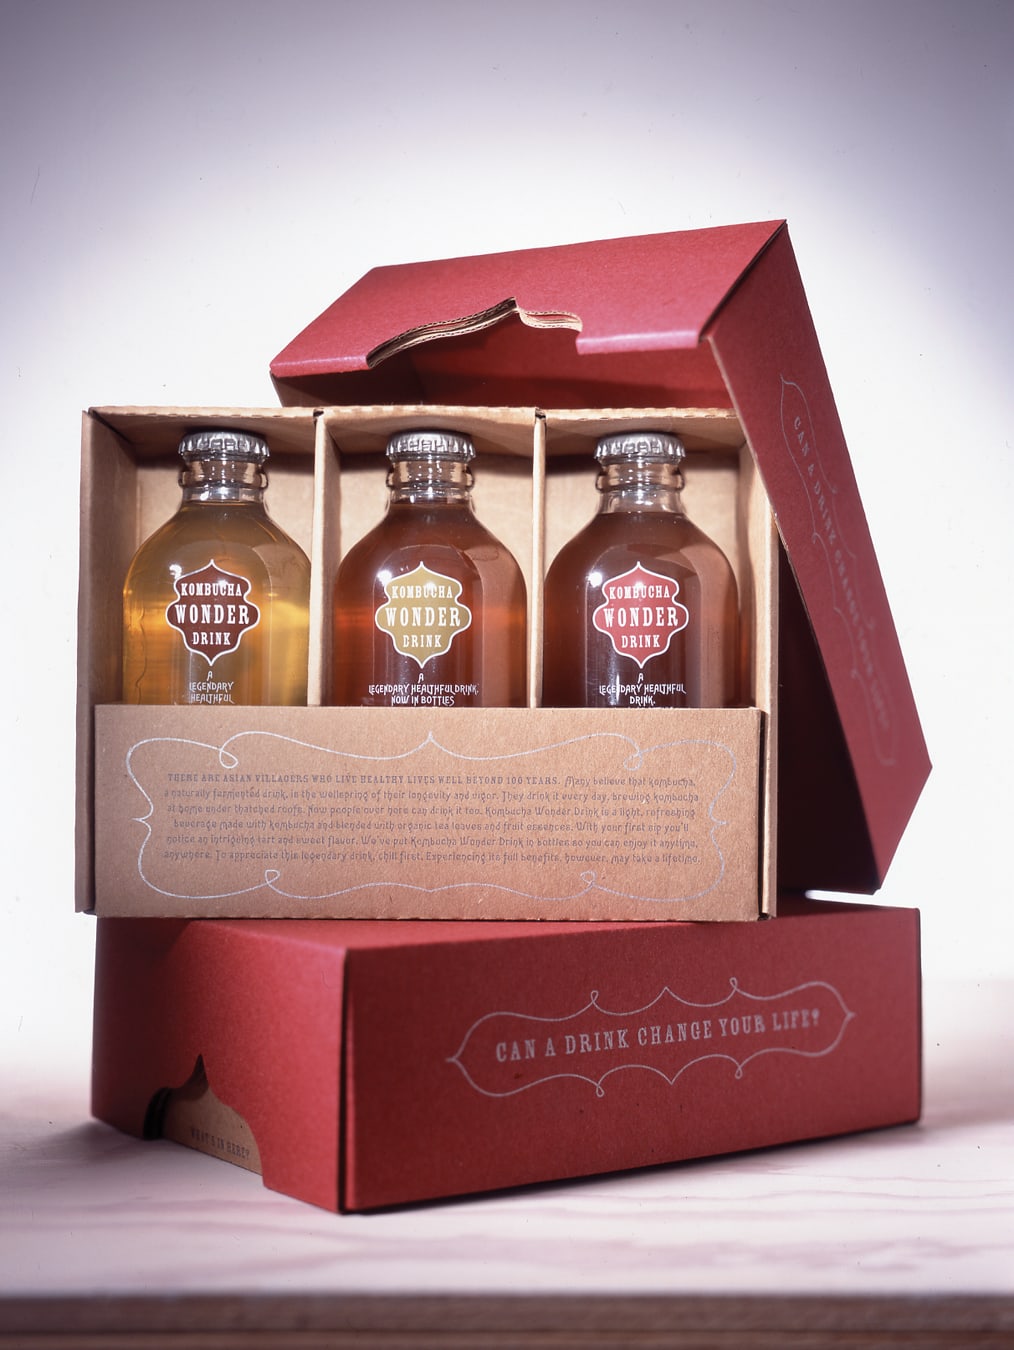 Kombucha Wonder Drink gift box packaging design